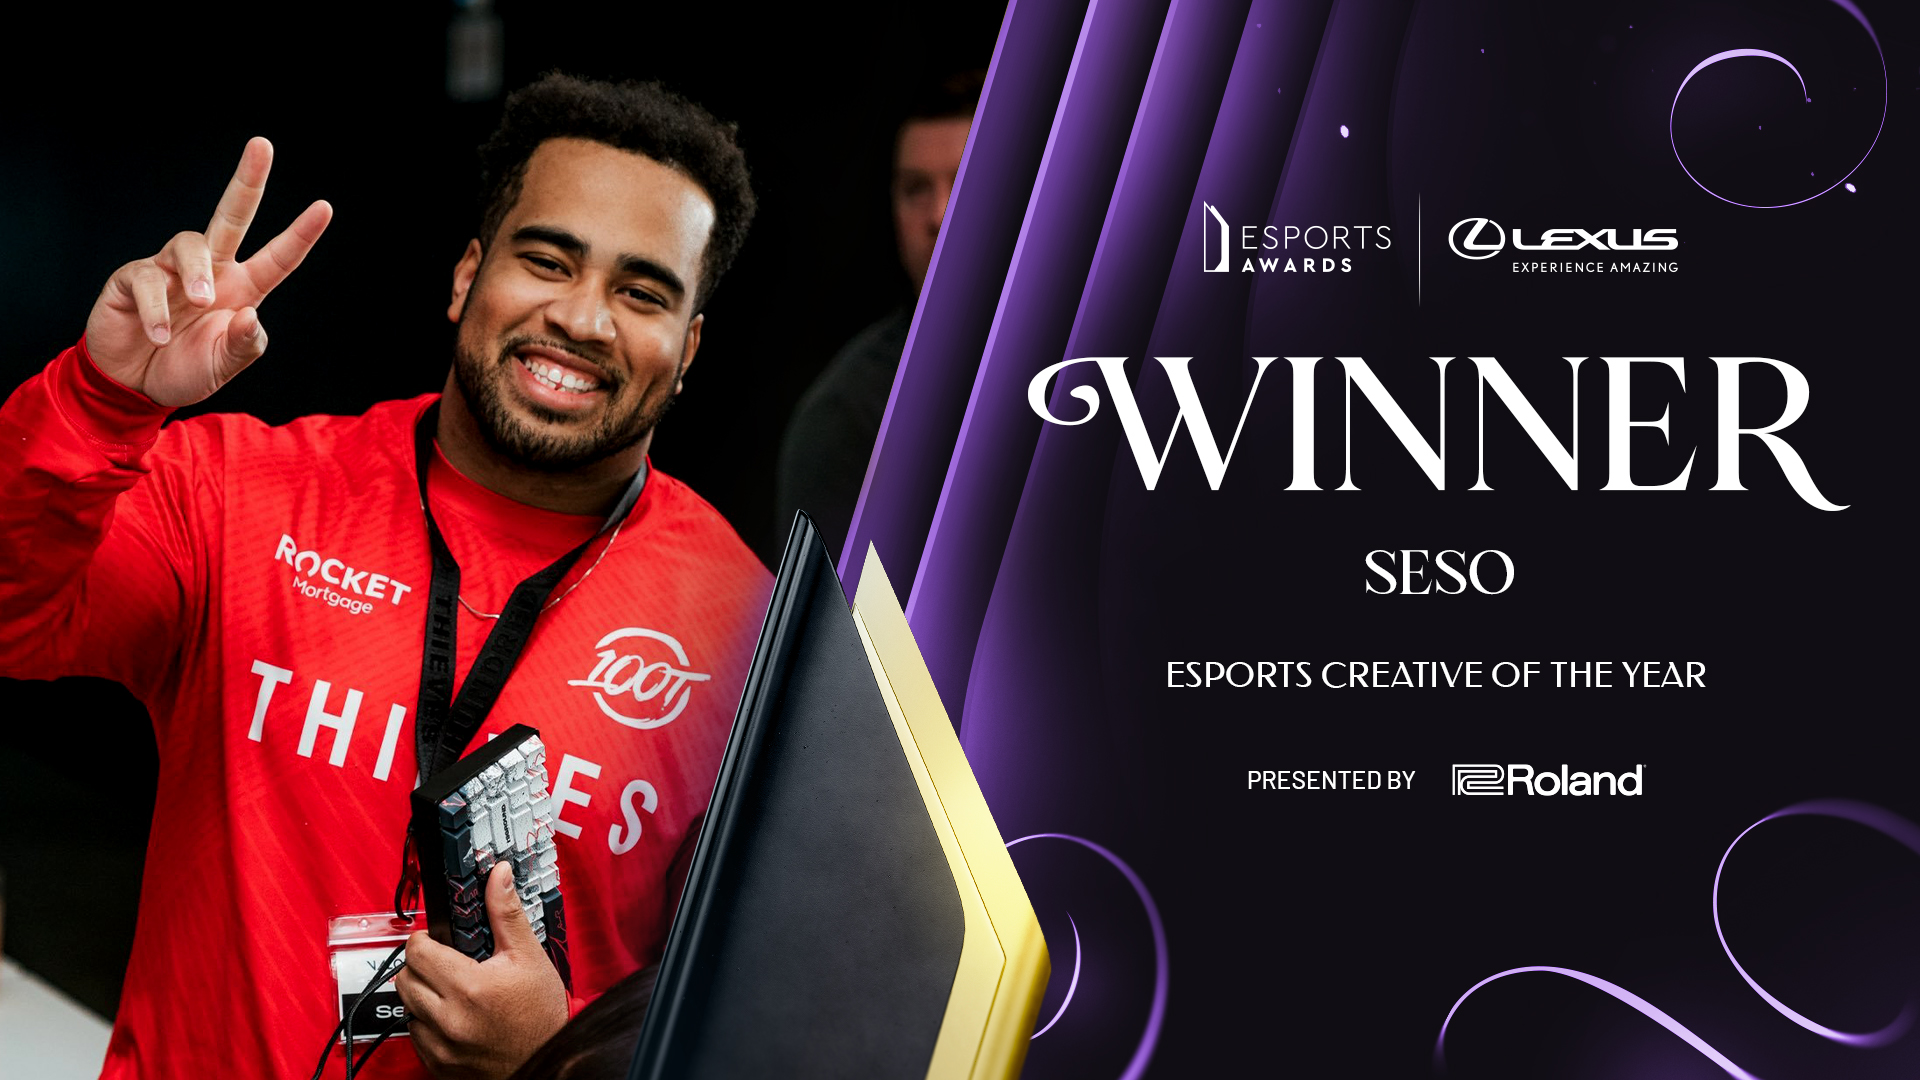 Esports Creative of the Year: Seso